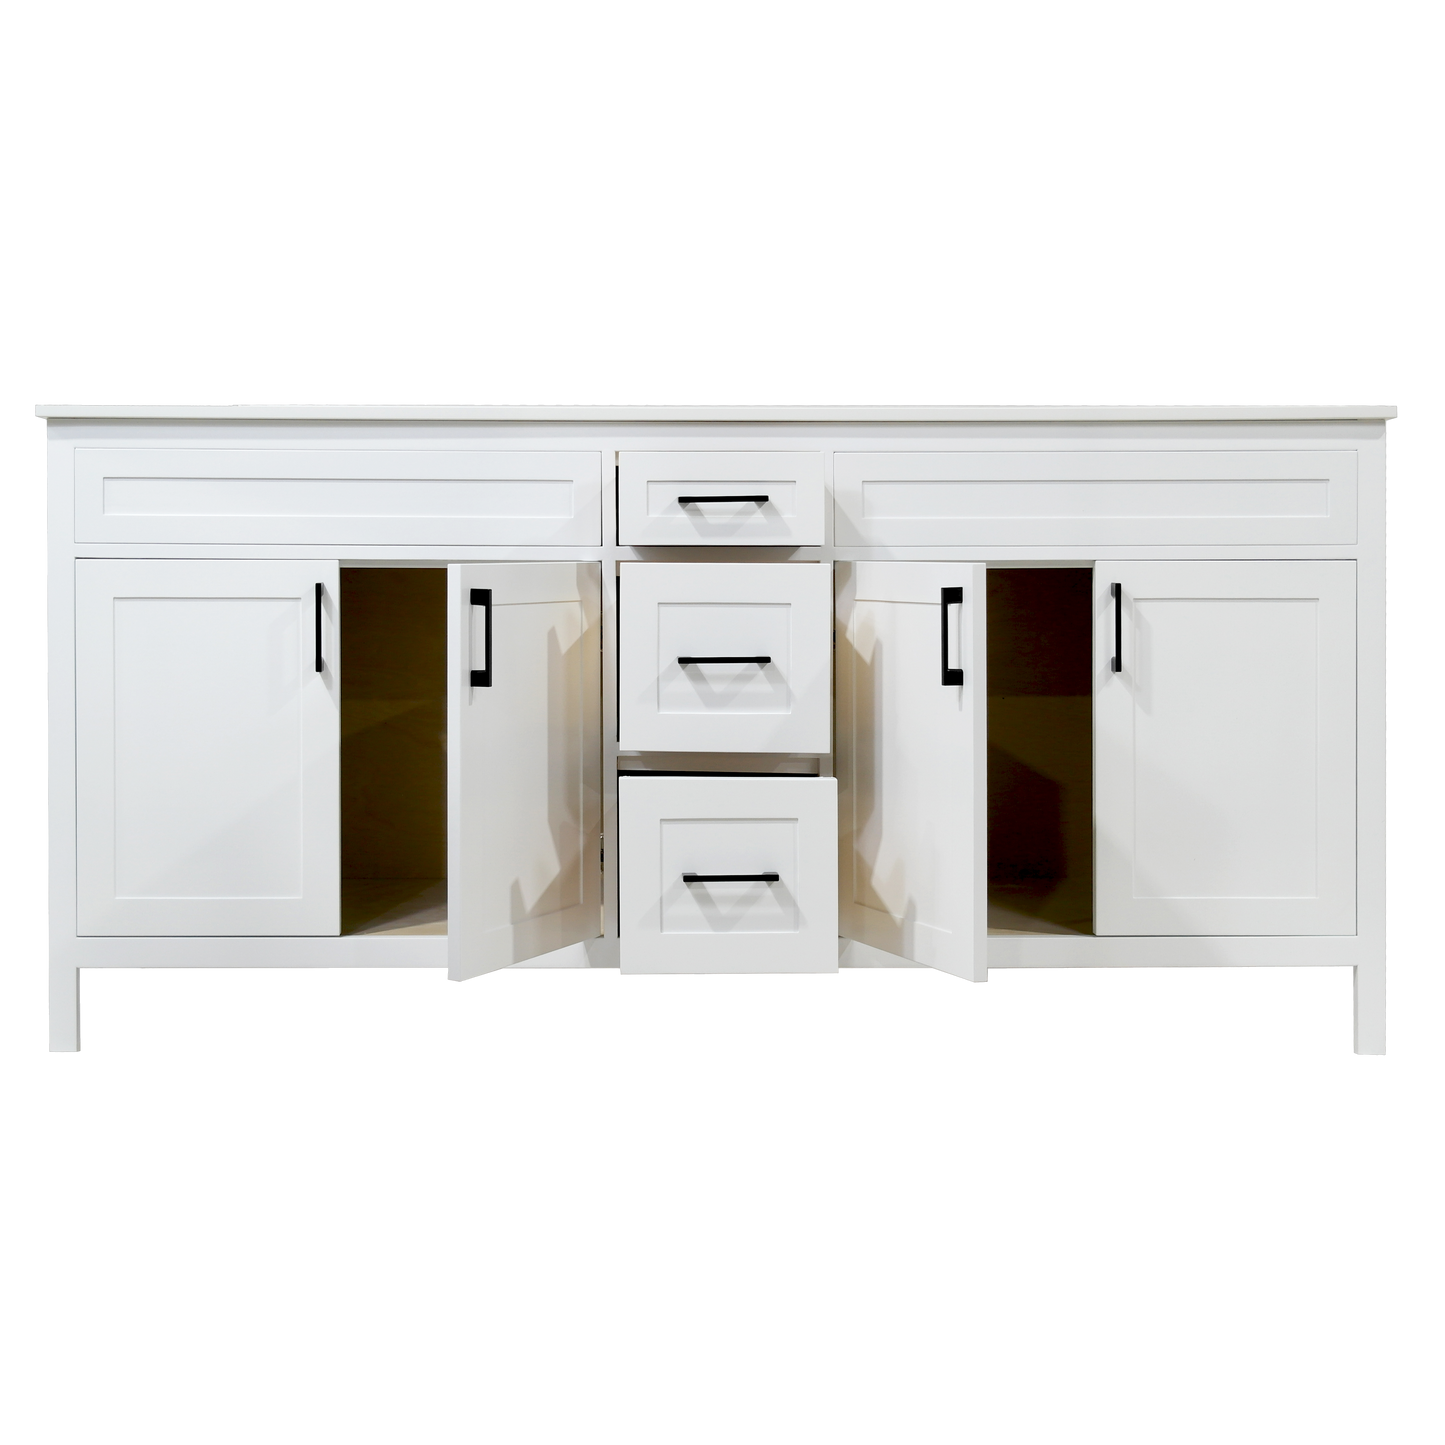 72" Snow White color wooden bathroom cabinet vanity with Quartz top double sink